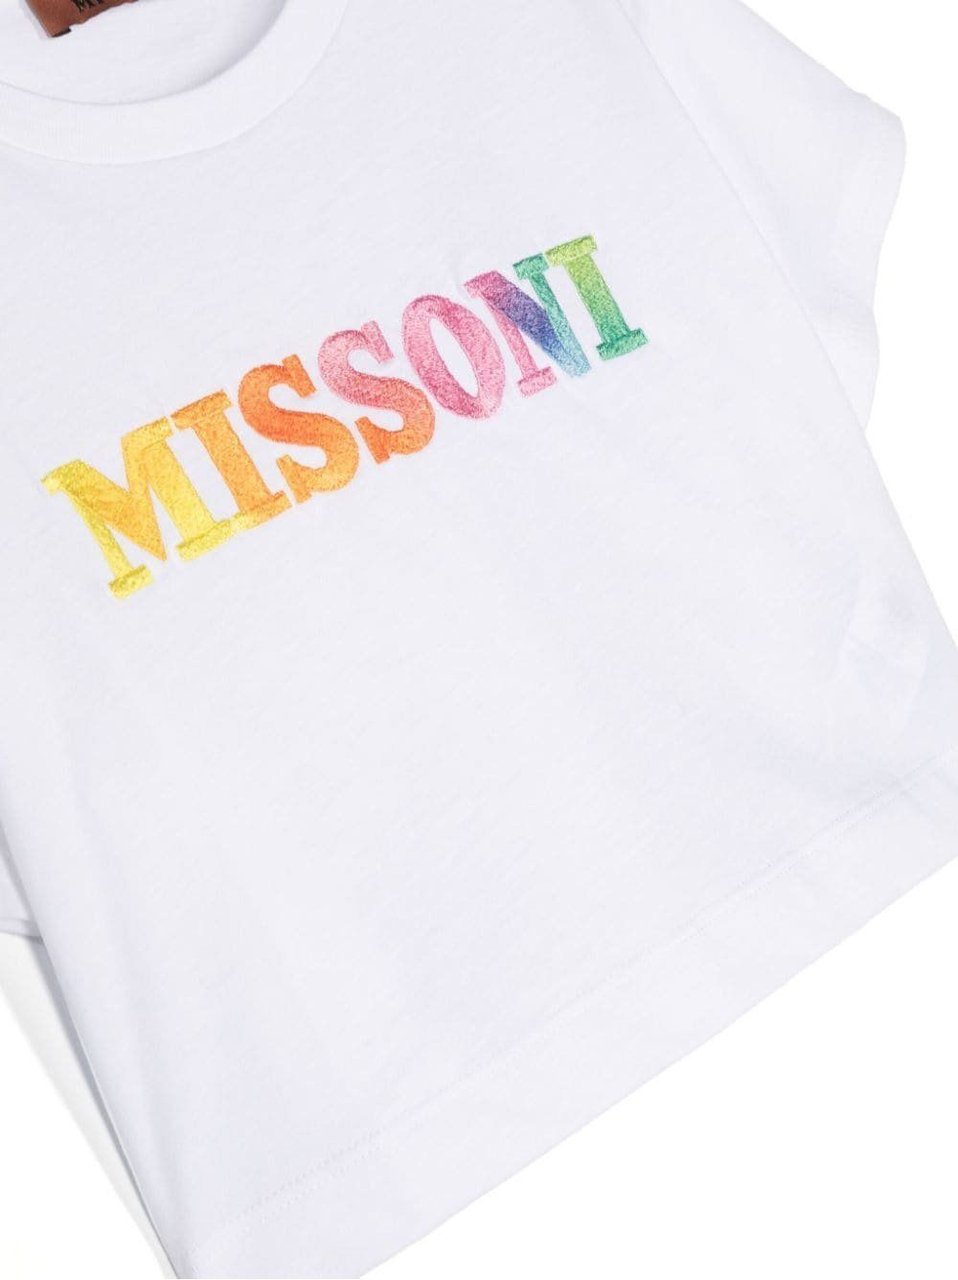 Missoni t-shirt white Wit